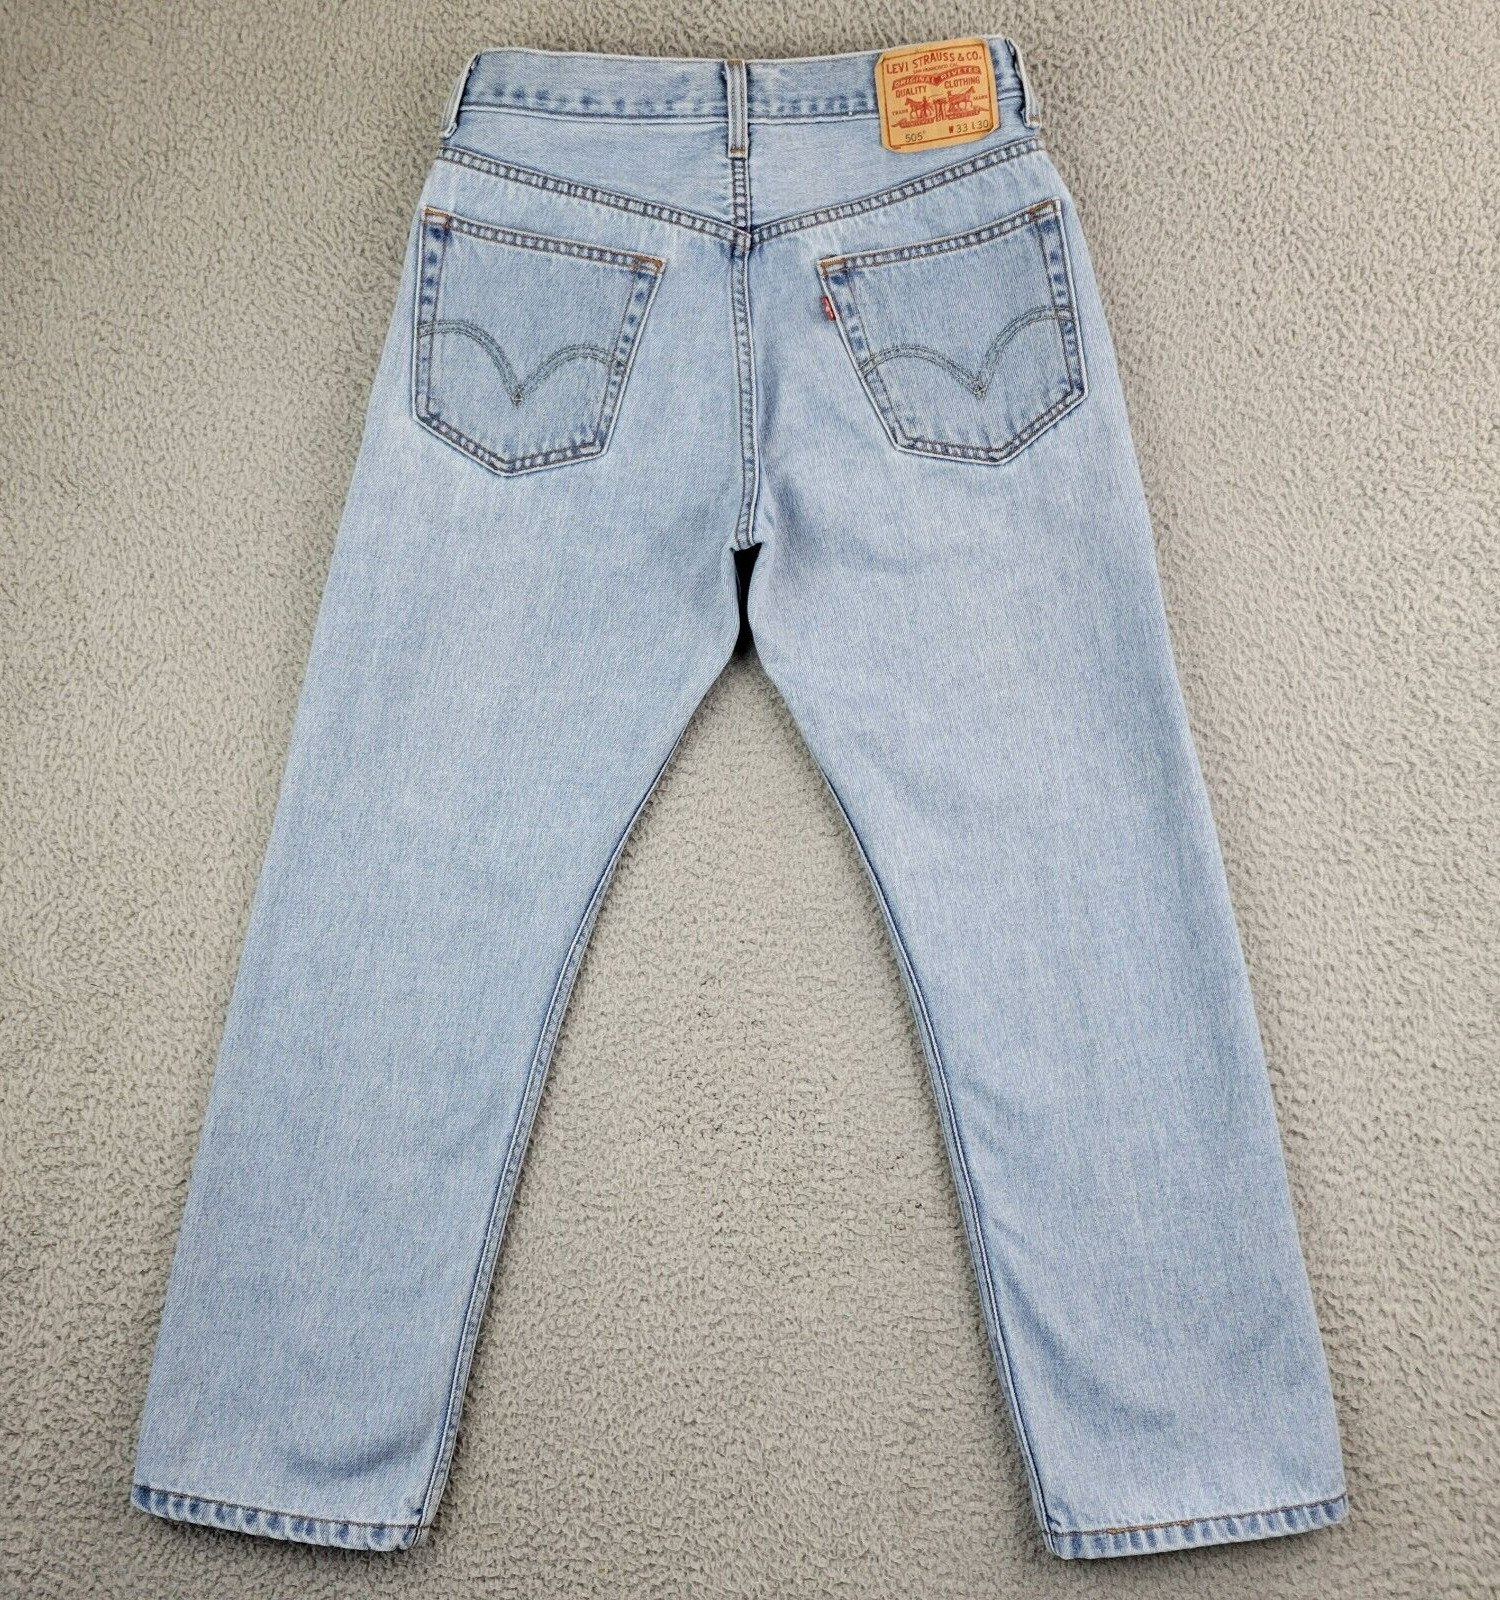 Levis 505 jeans mens 33x28.5 blue 100% cotton regular straight 2006 (tag 32x30)